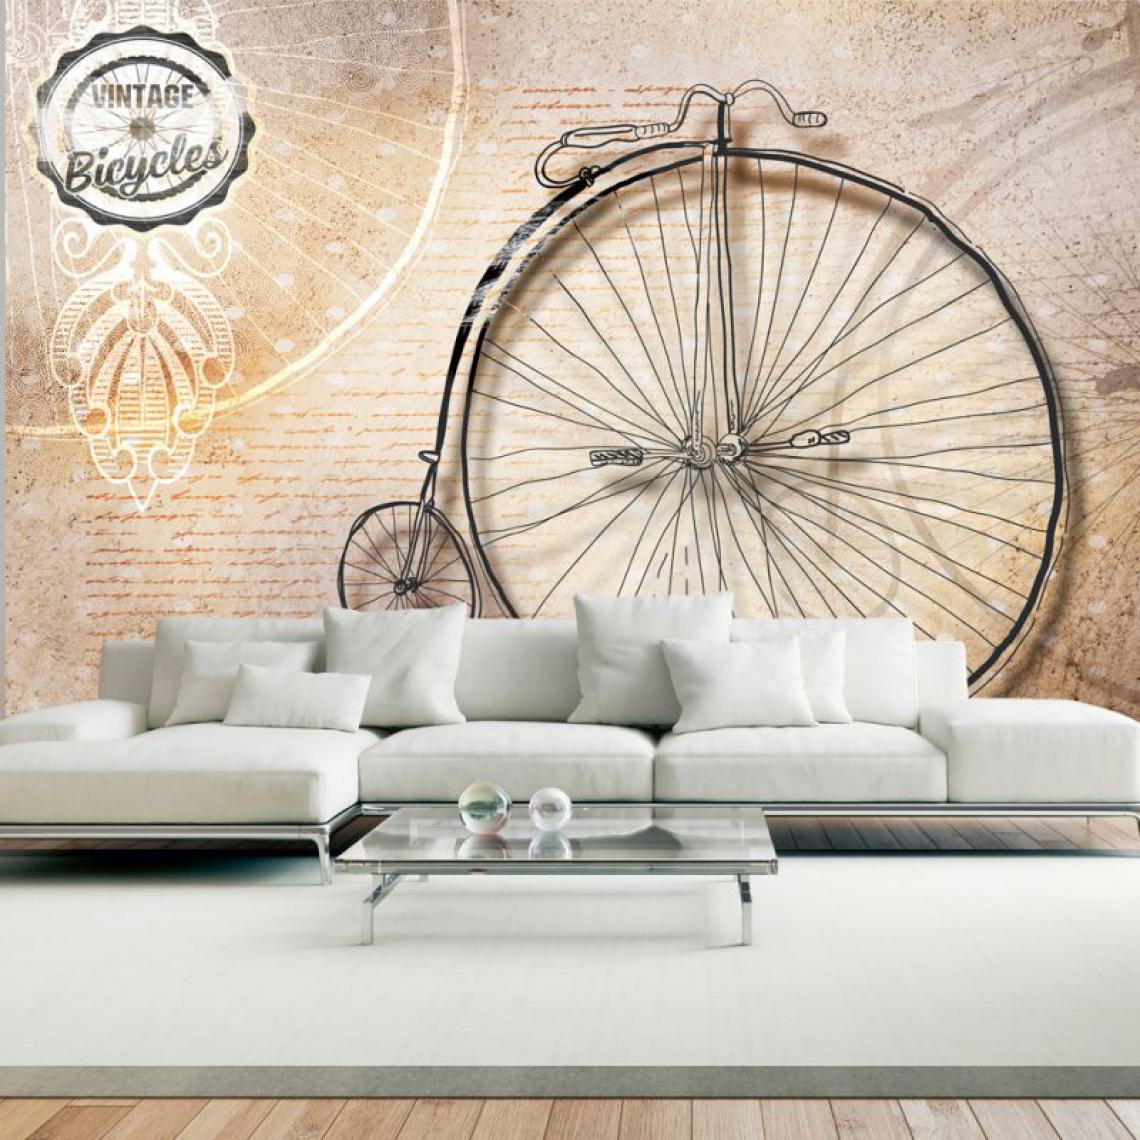 Artgeist - Papier peint - Vintage bicycles - sepia .Taille : 100x70 - Papier peint